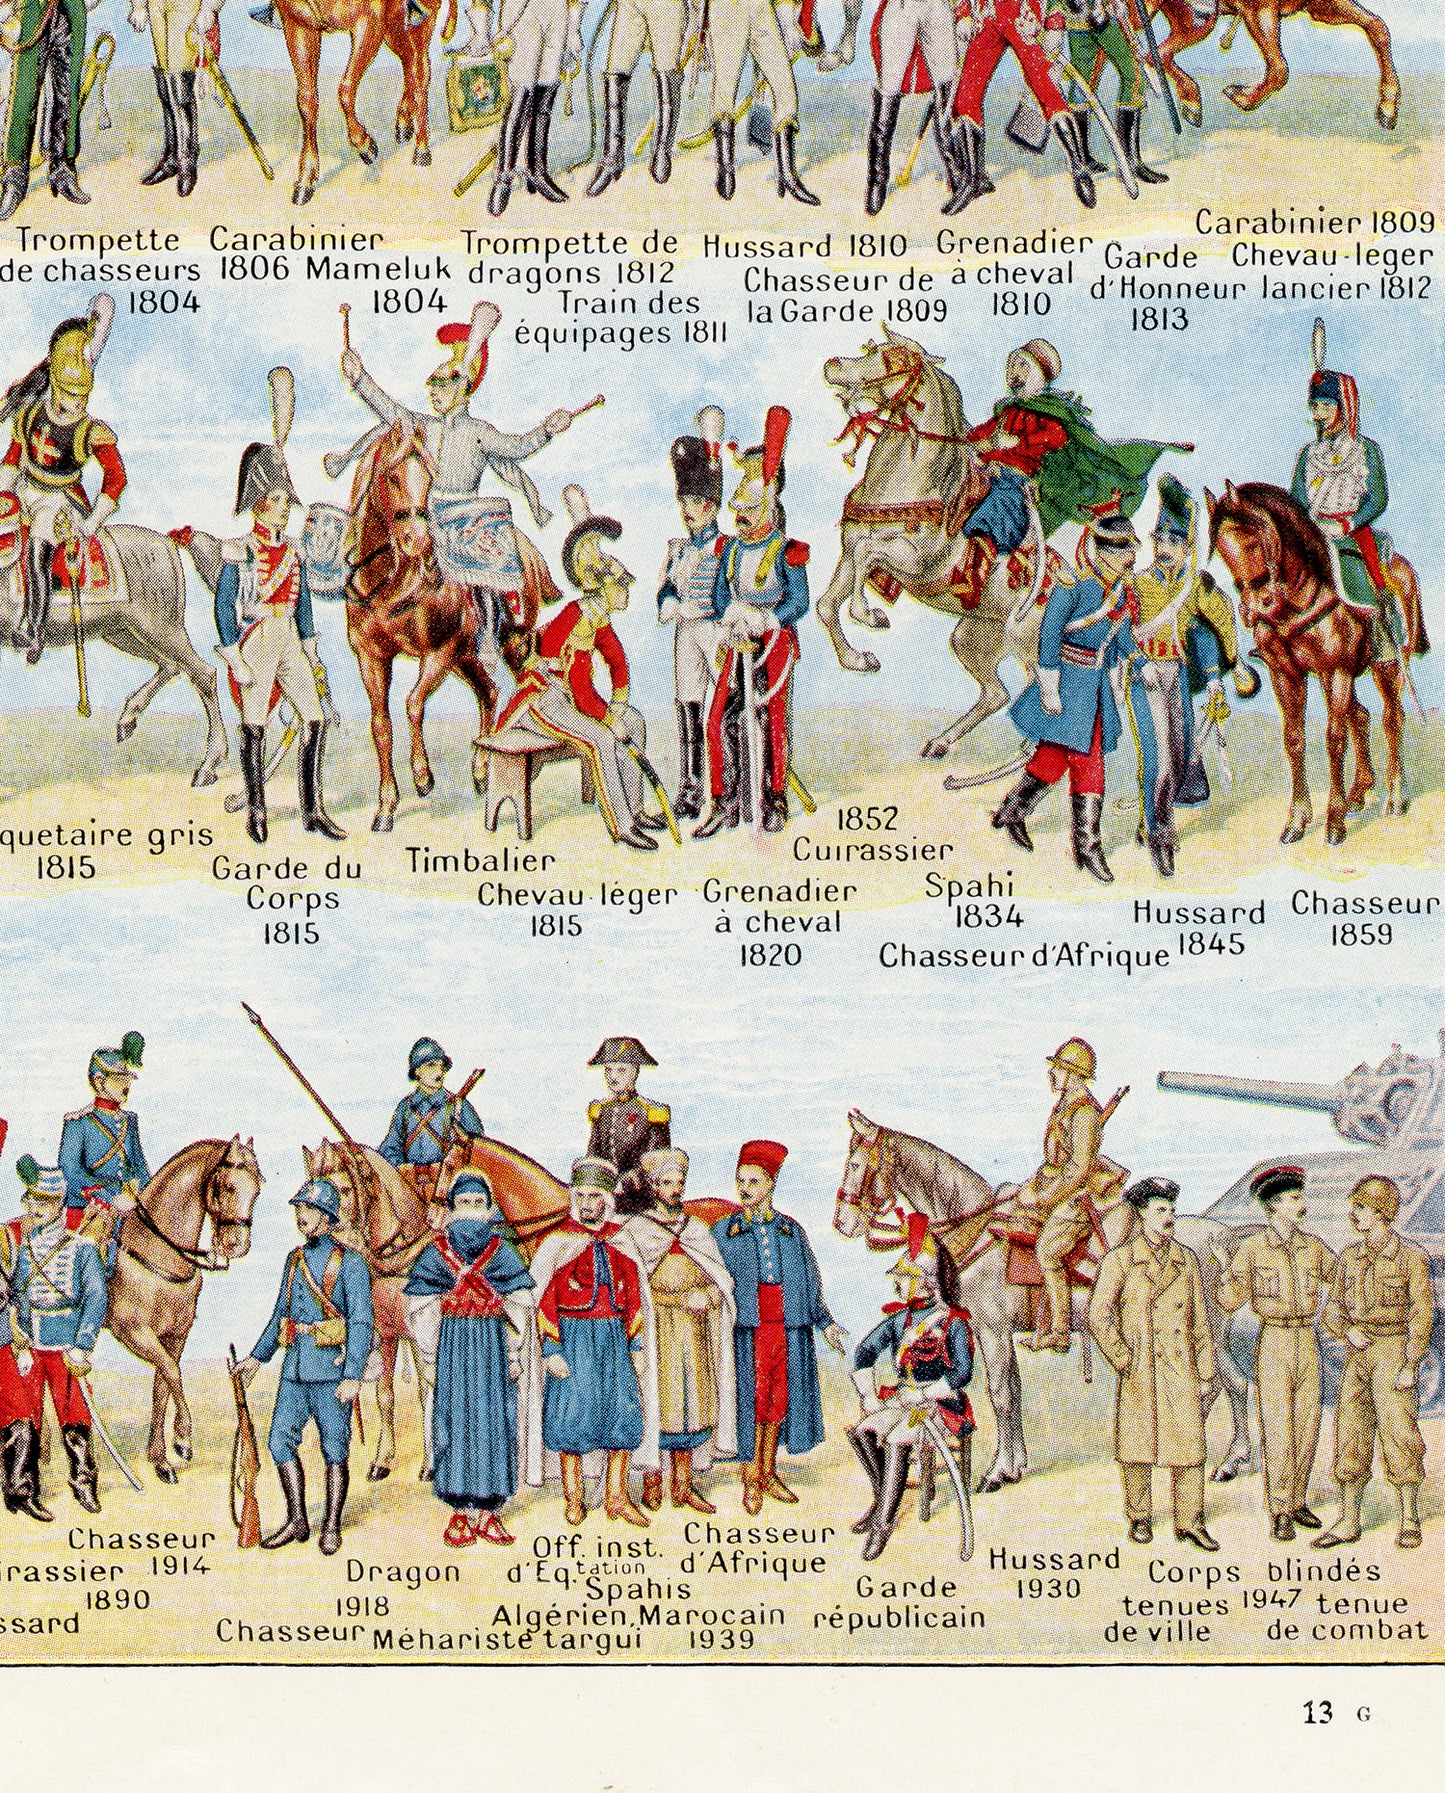 1948 Illustration de Cavalerie